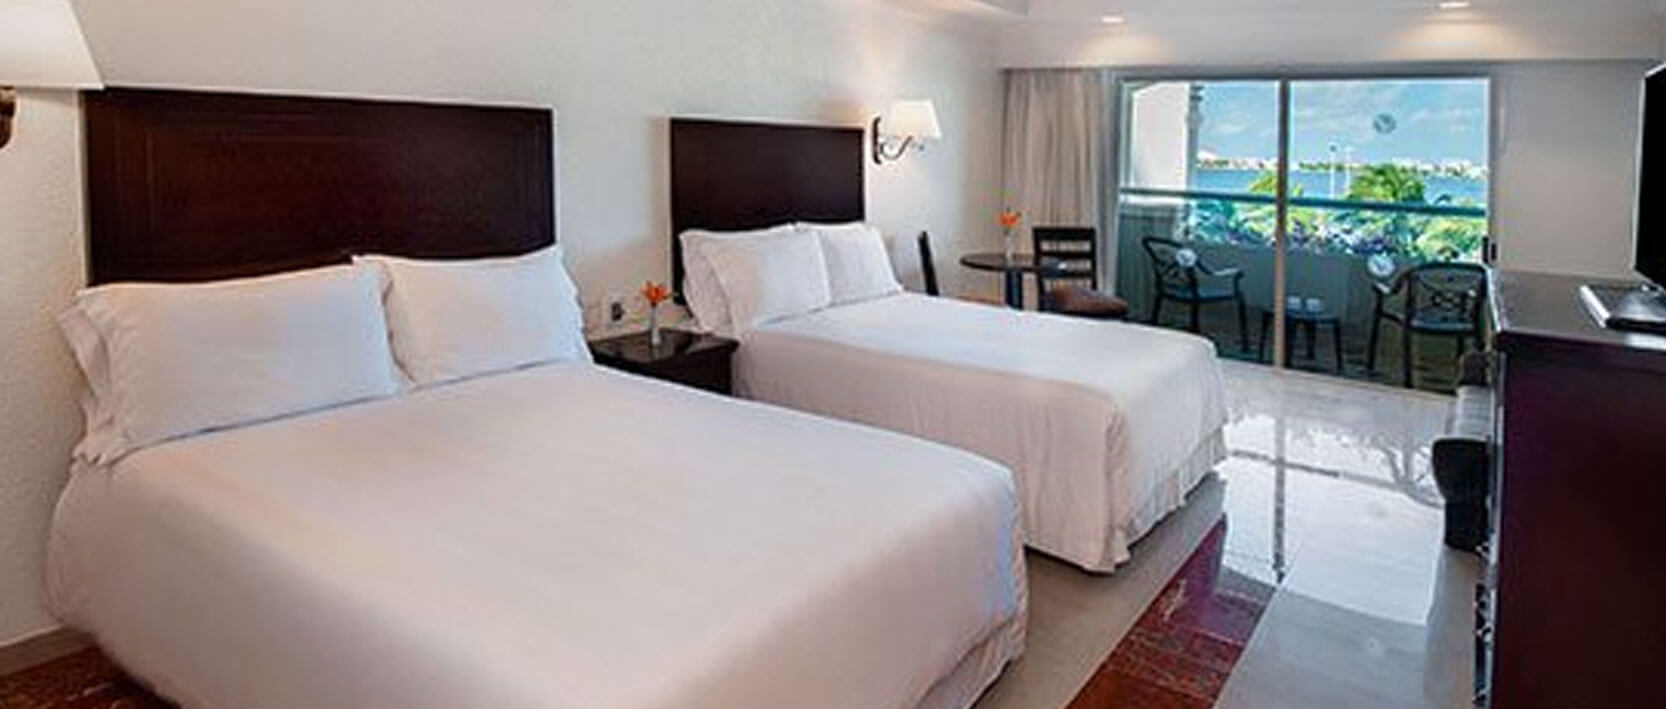 Gran Caribe Cancun Accommodations - Standard